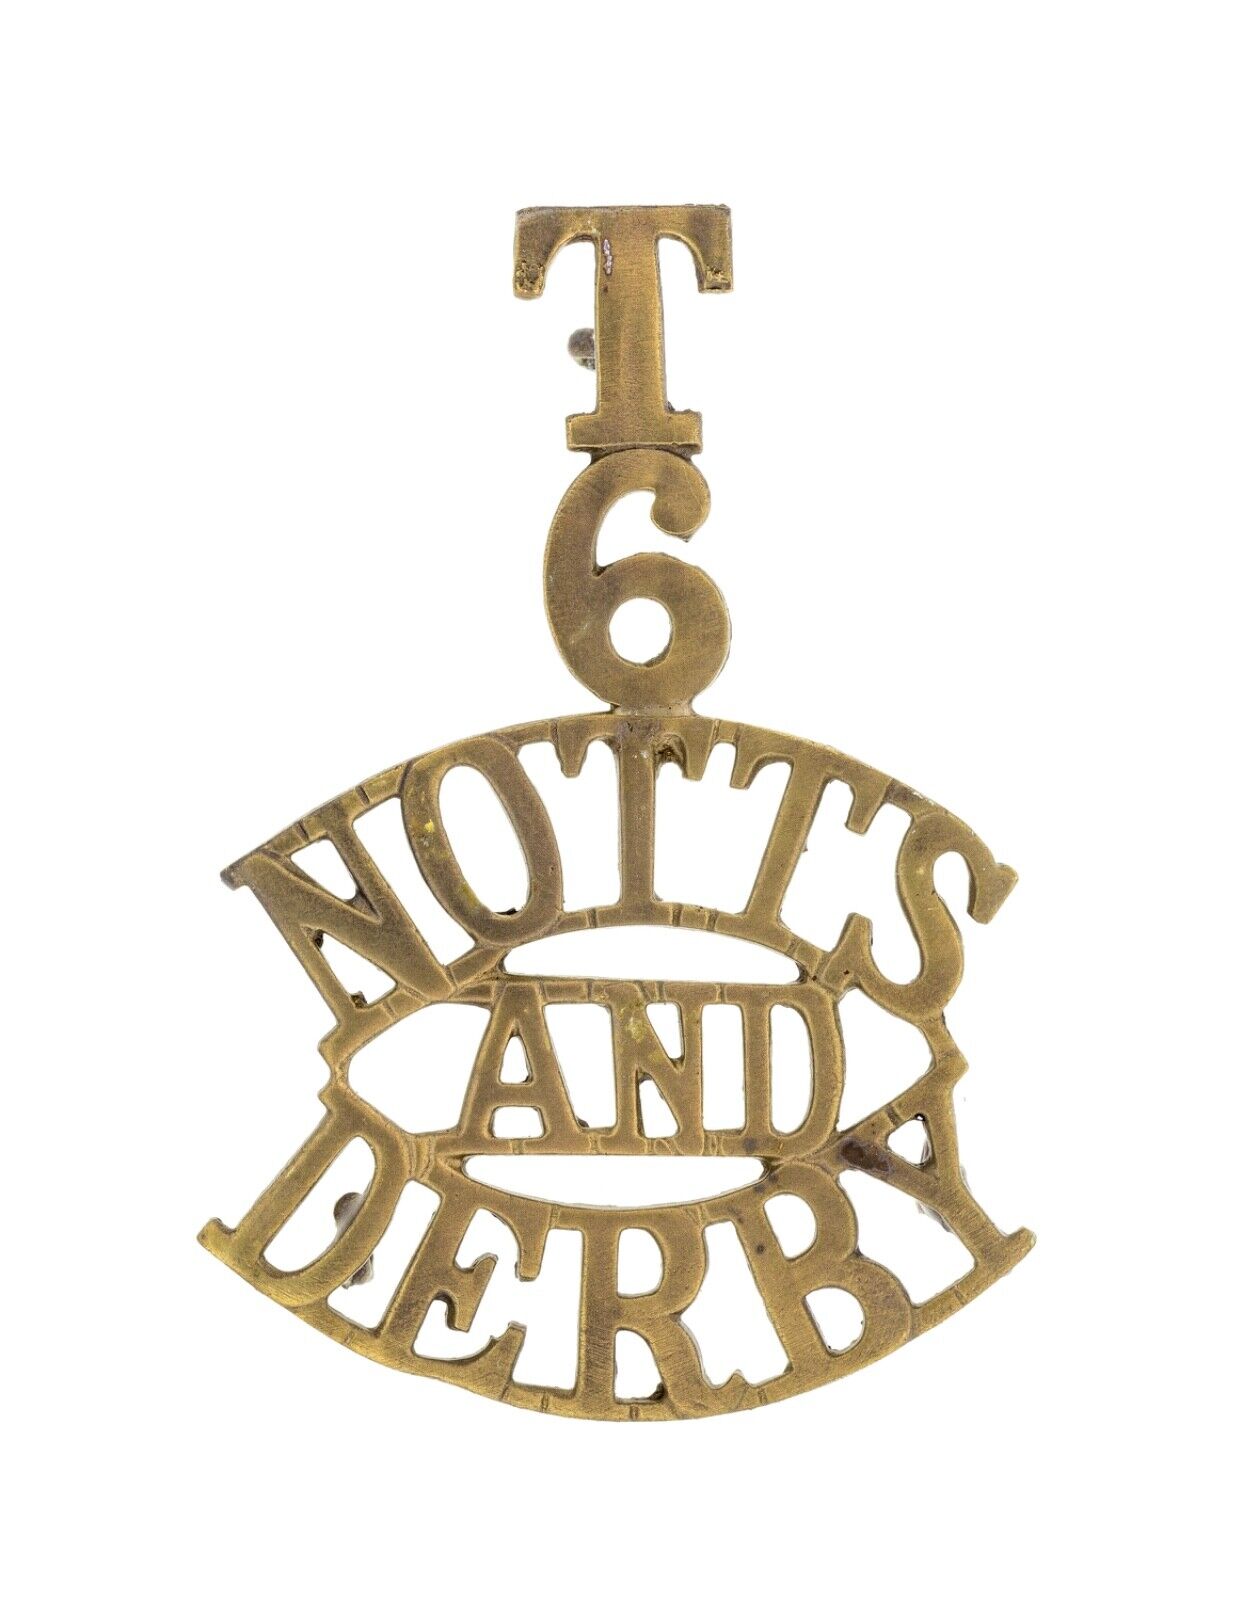 T 6 Notts And Derby Shoulder Title Brass Metal